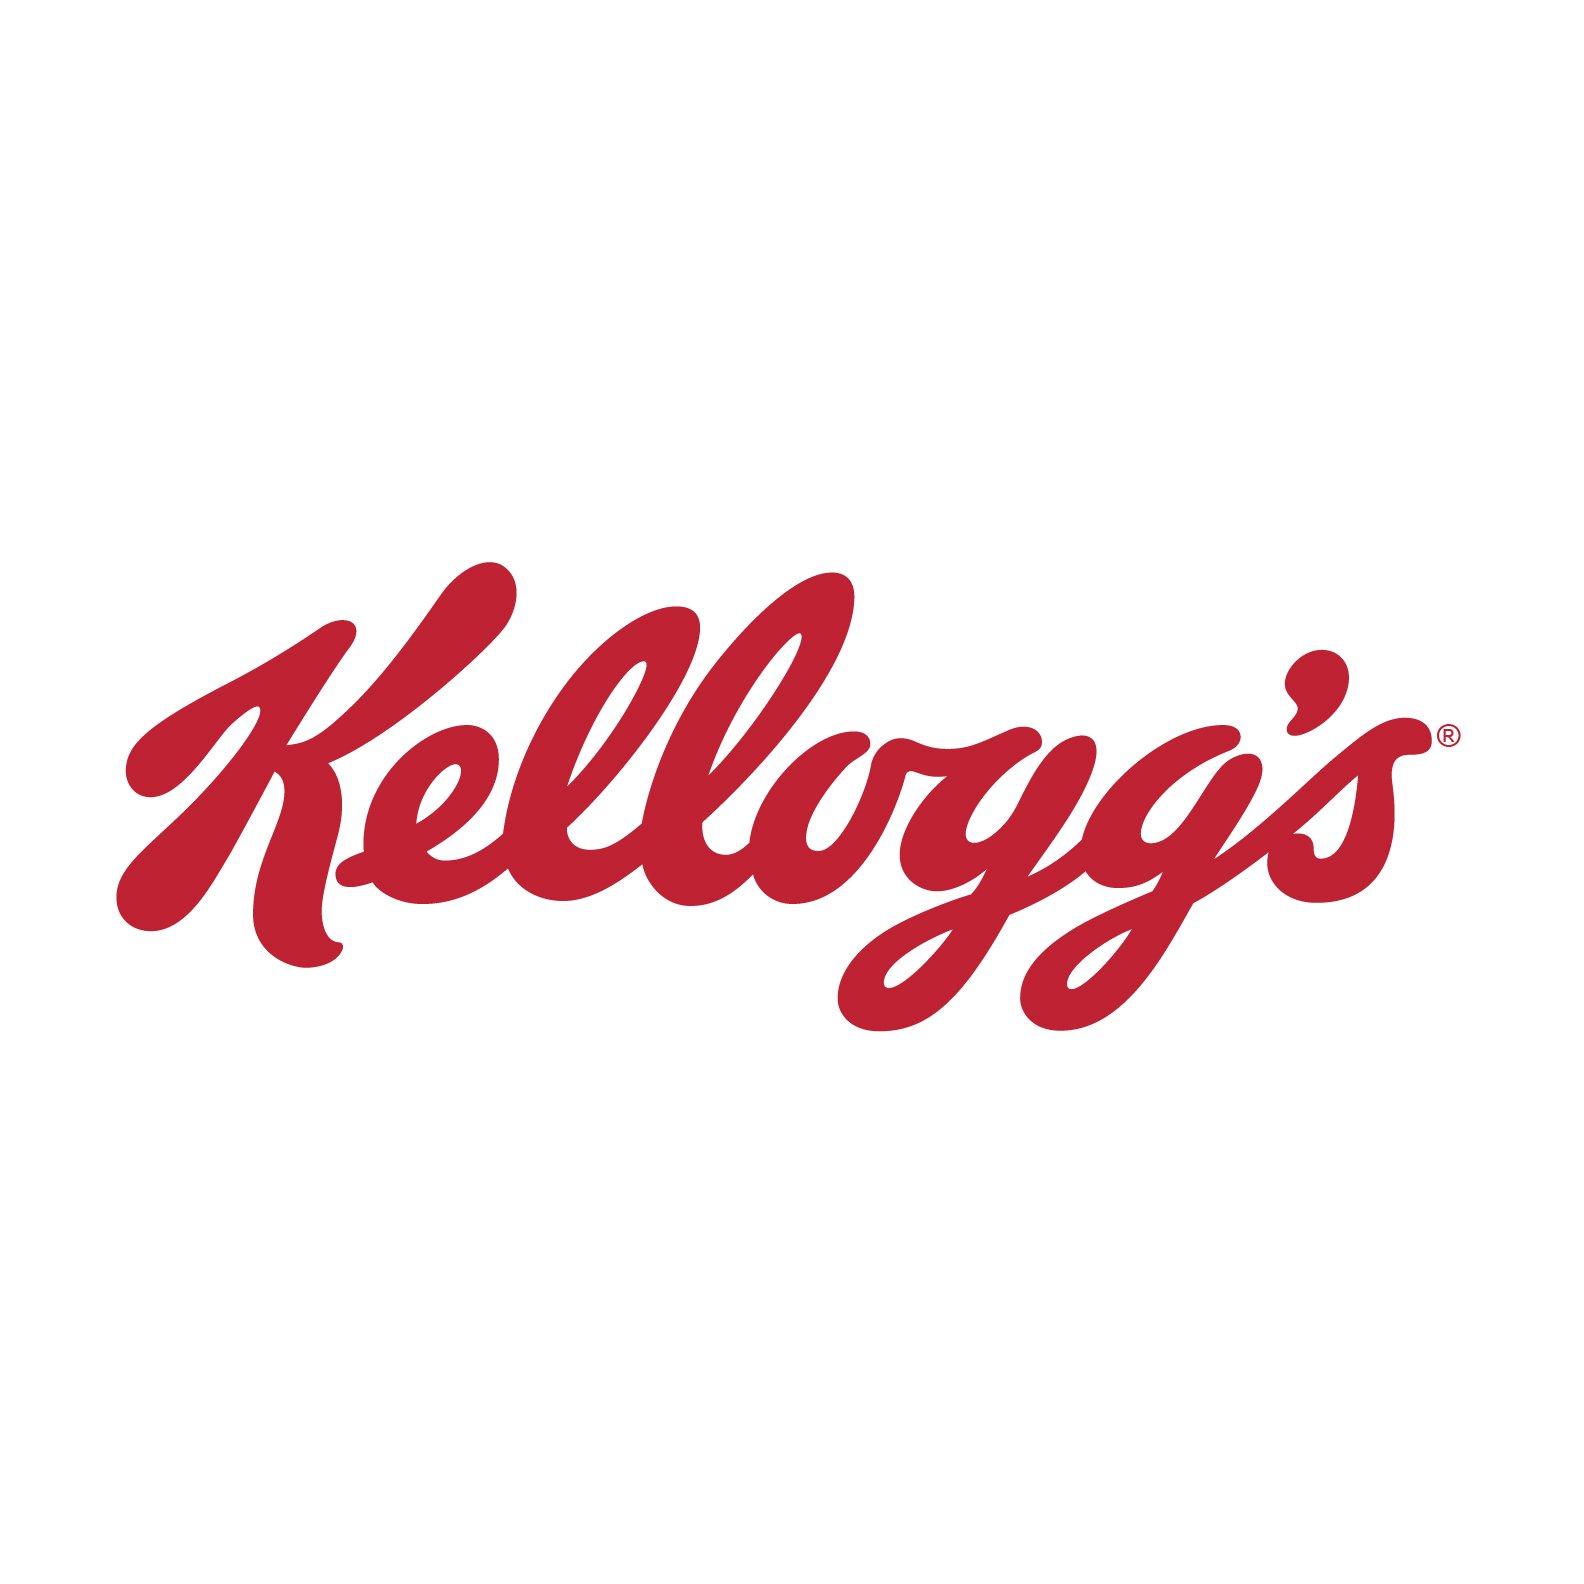 Kellogg's logo_bf2032_square.jpg